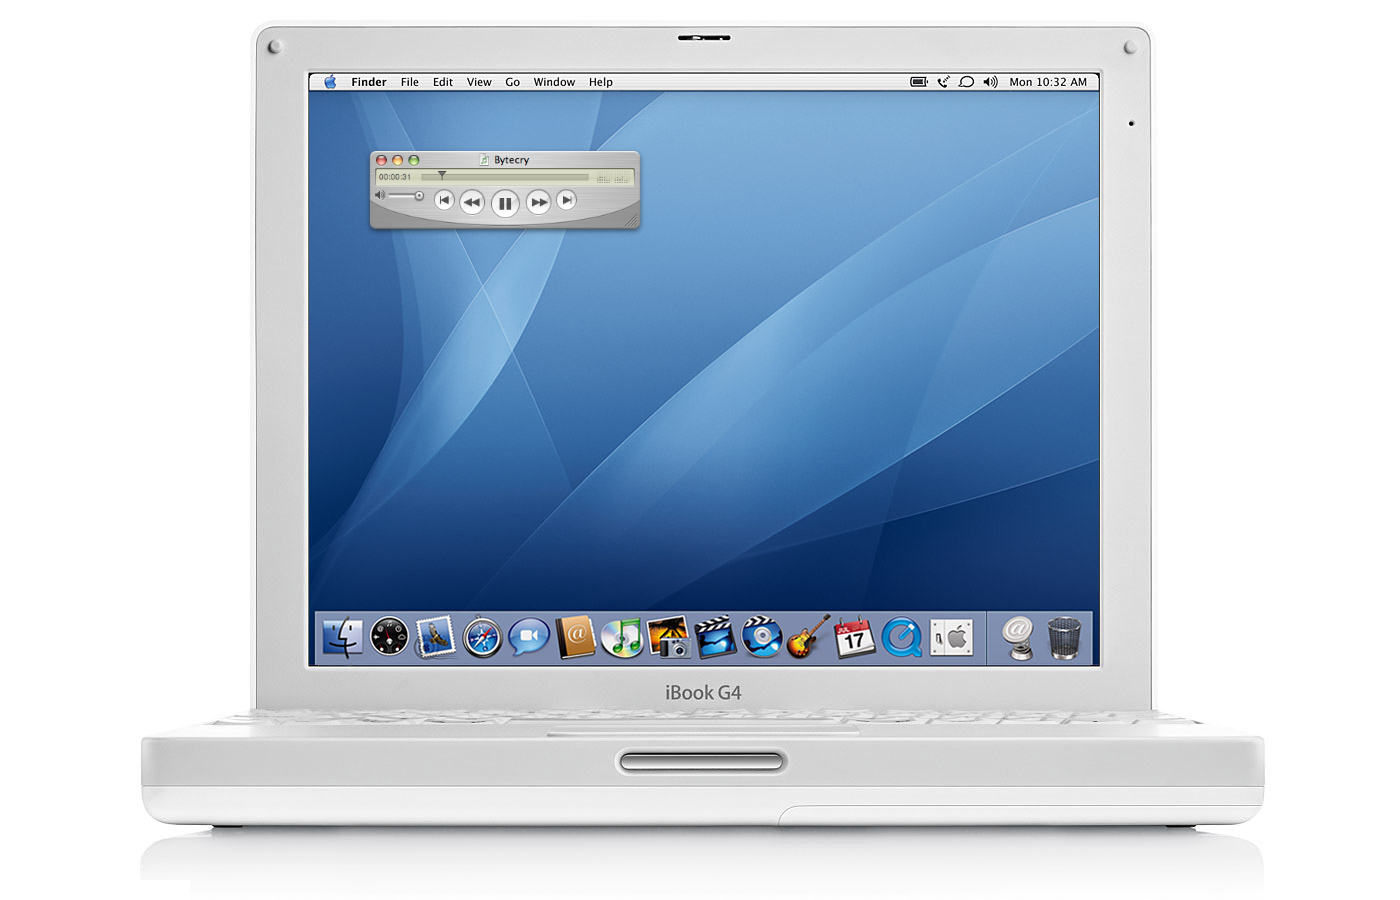 QuickTime 7 running within Mac OS X Tiger on an iBook G4 Macintosh.